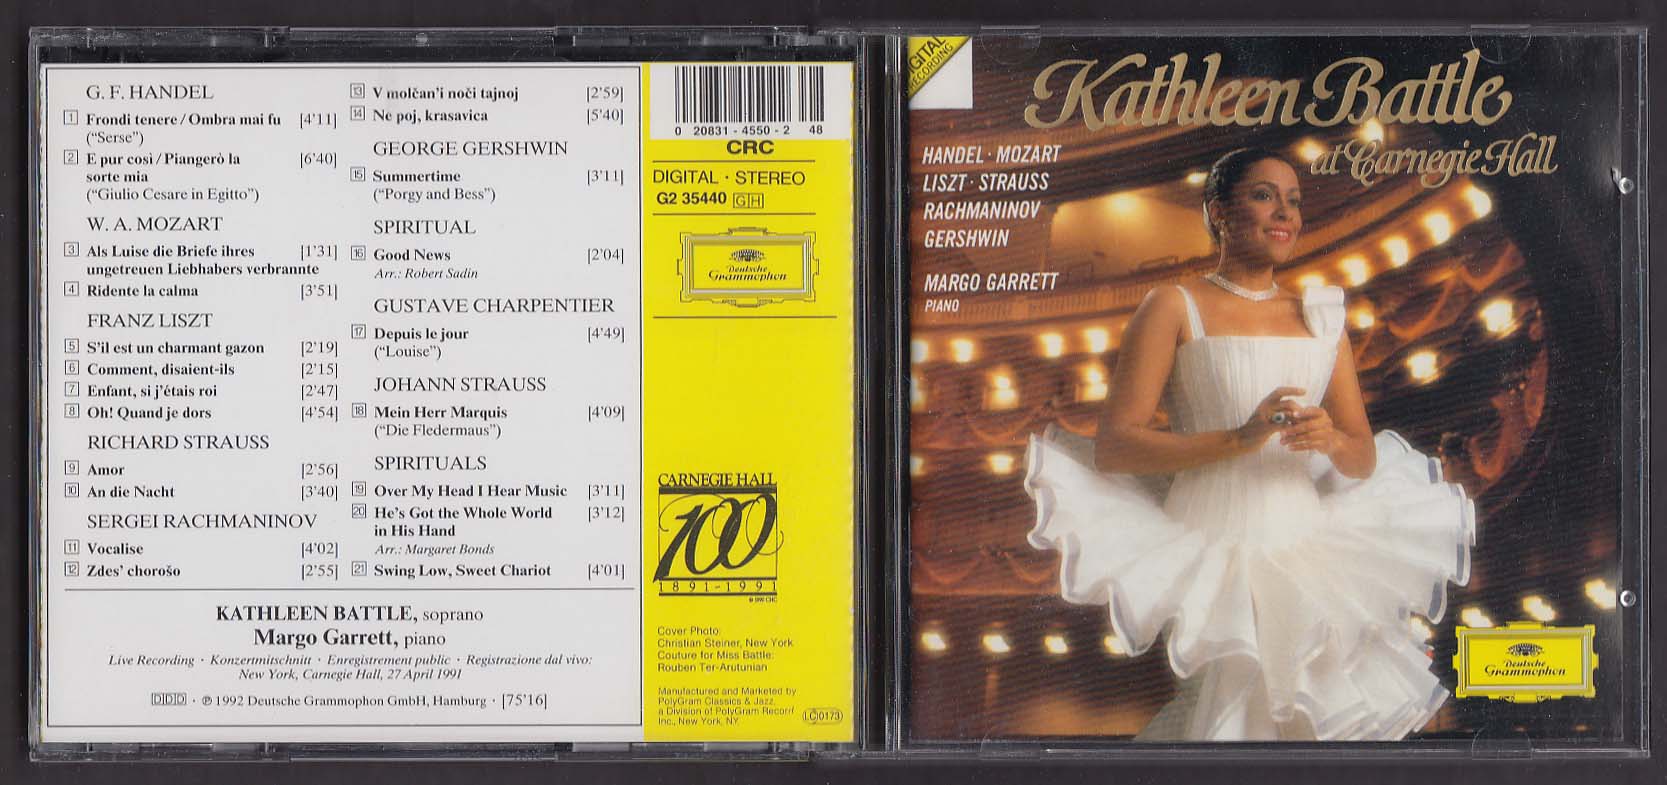 Kathleen Battle at Carnegie Hall G2 35440 Deutsche Grammphon CD 1992